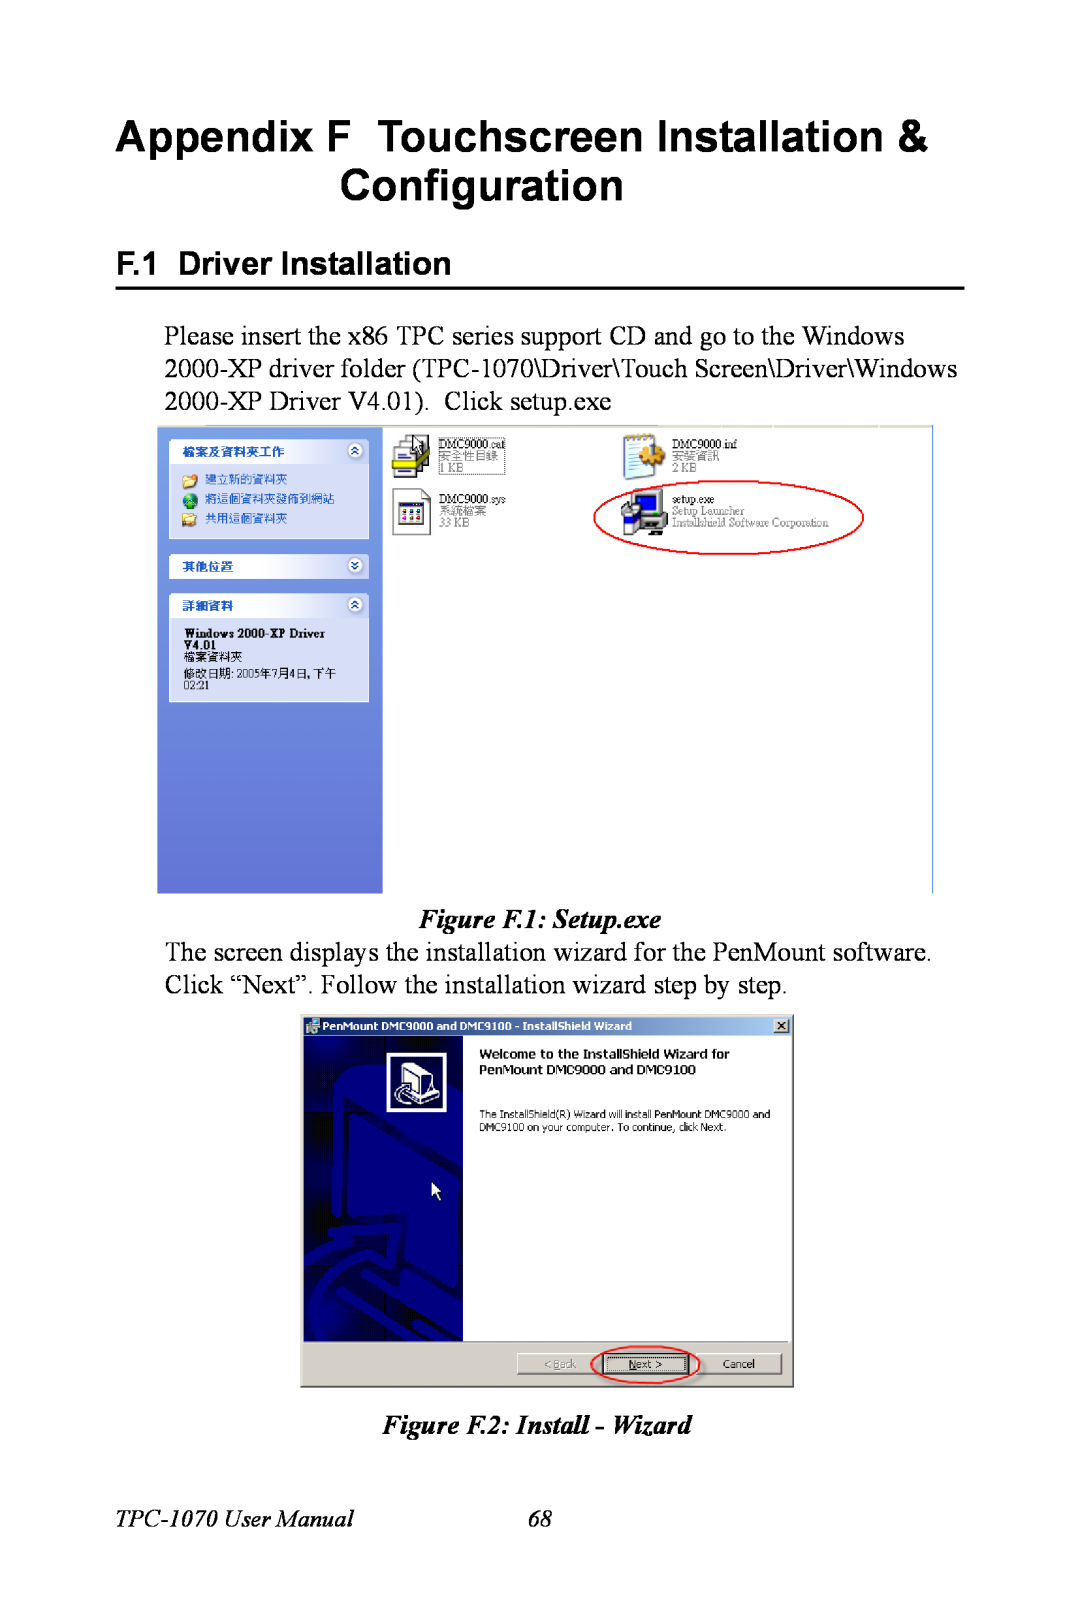 Intel TPC-1070 Appendix F Touchscreen Installation & Configuration, F.1 Driver Installation, Figure F.1 Setup.exe 